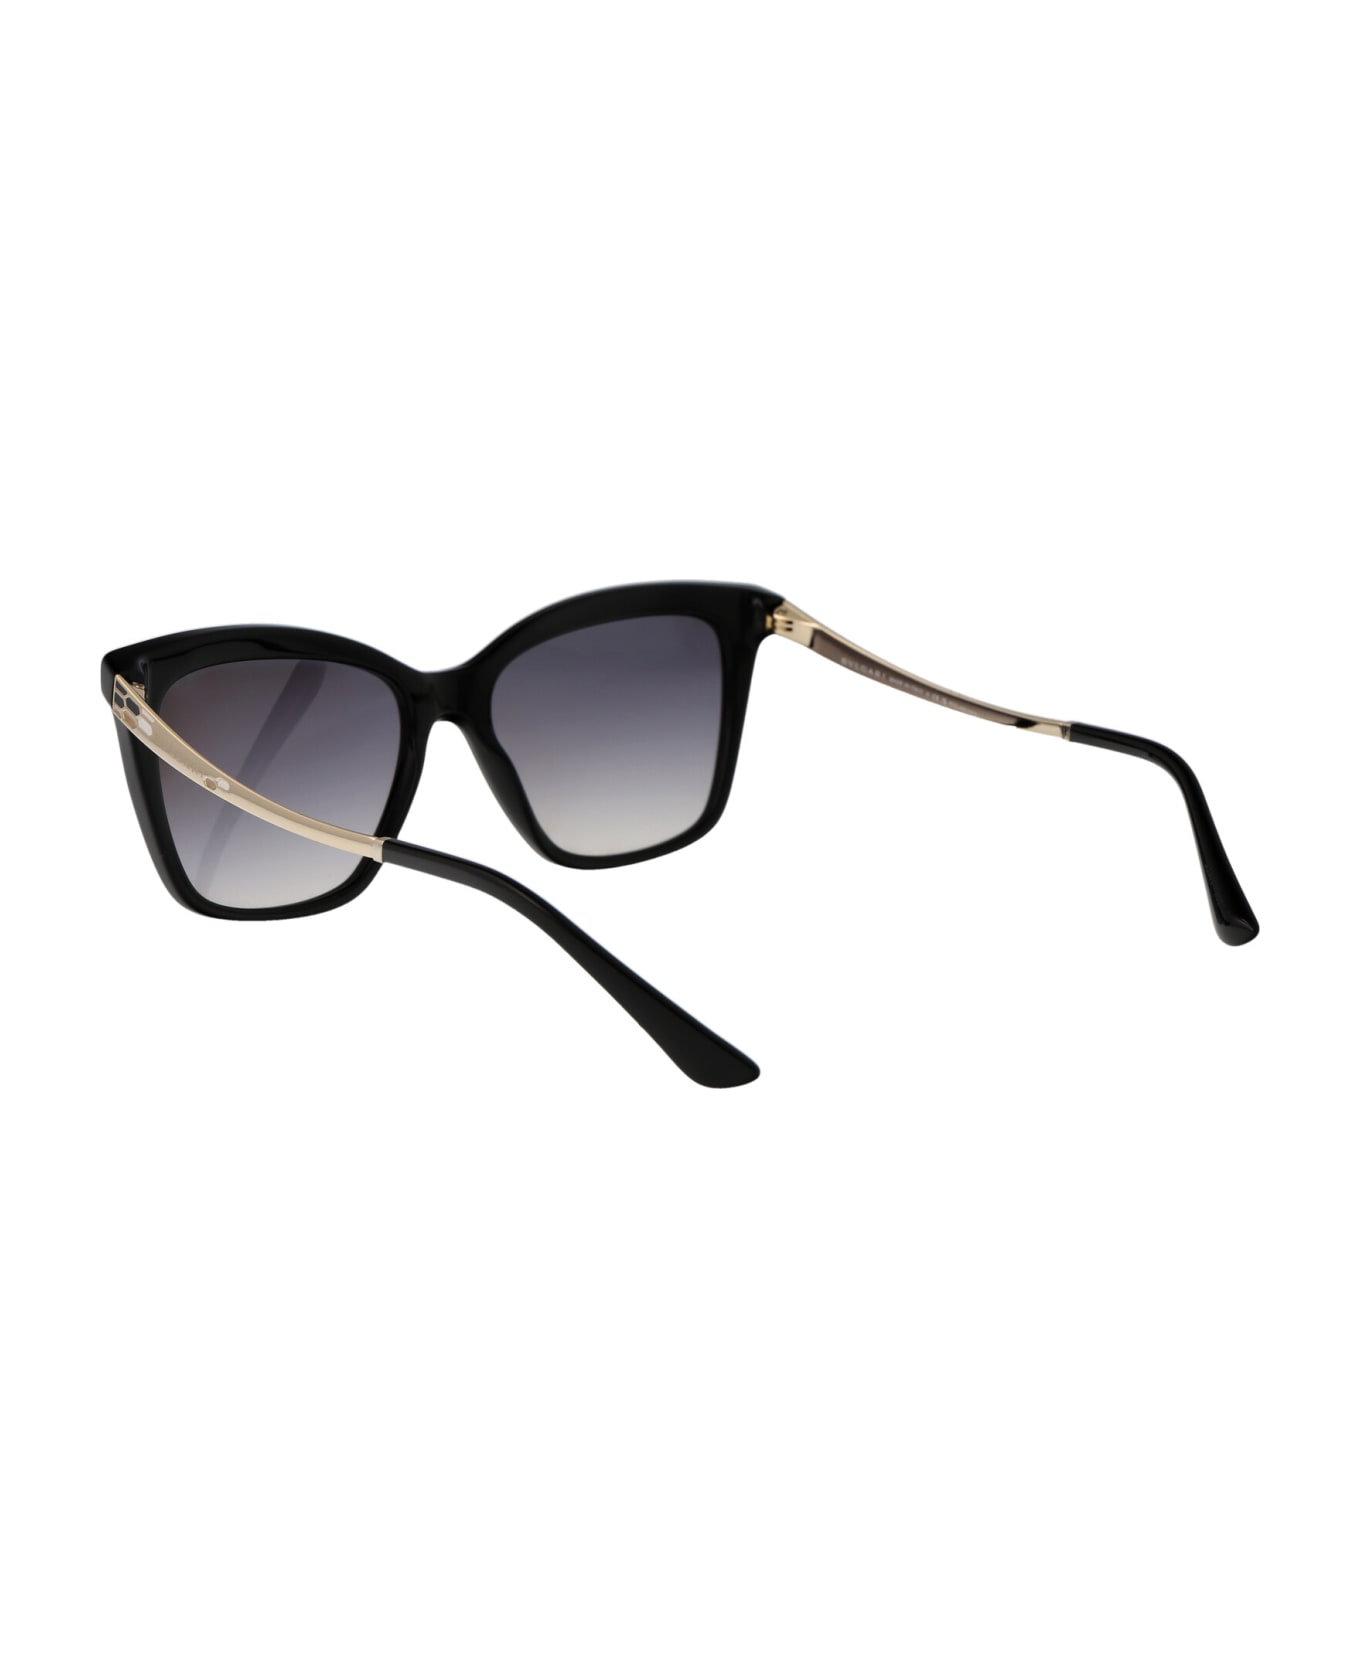 Bulgari 0bv8257 Sunglasses - 501/T3 BLACK サングラス